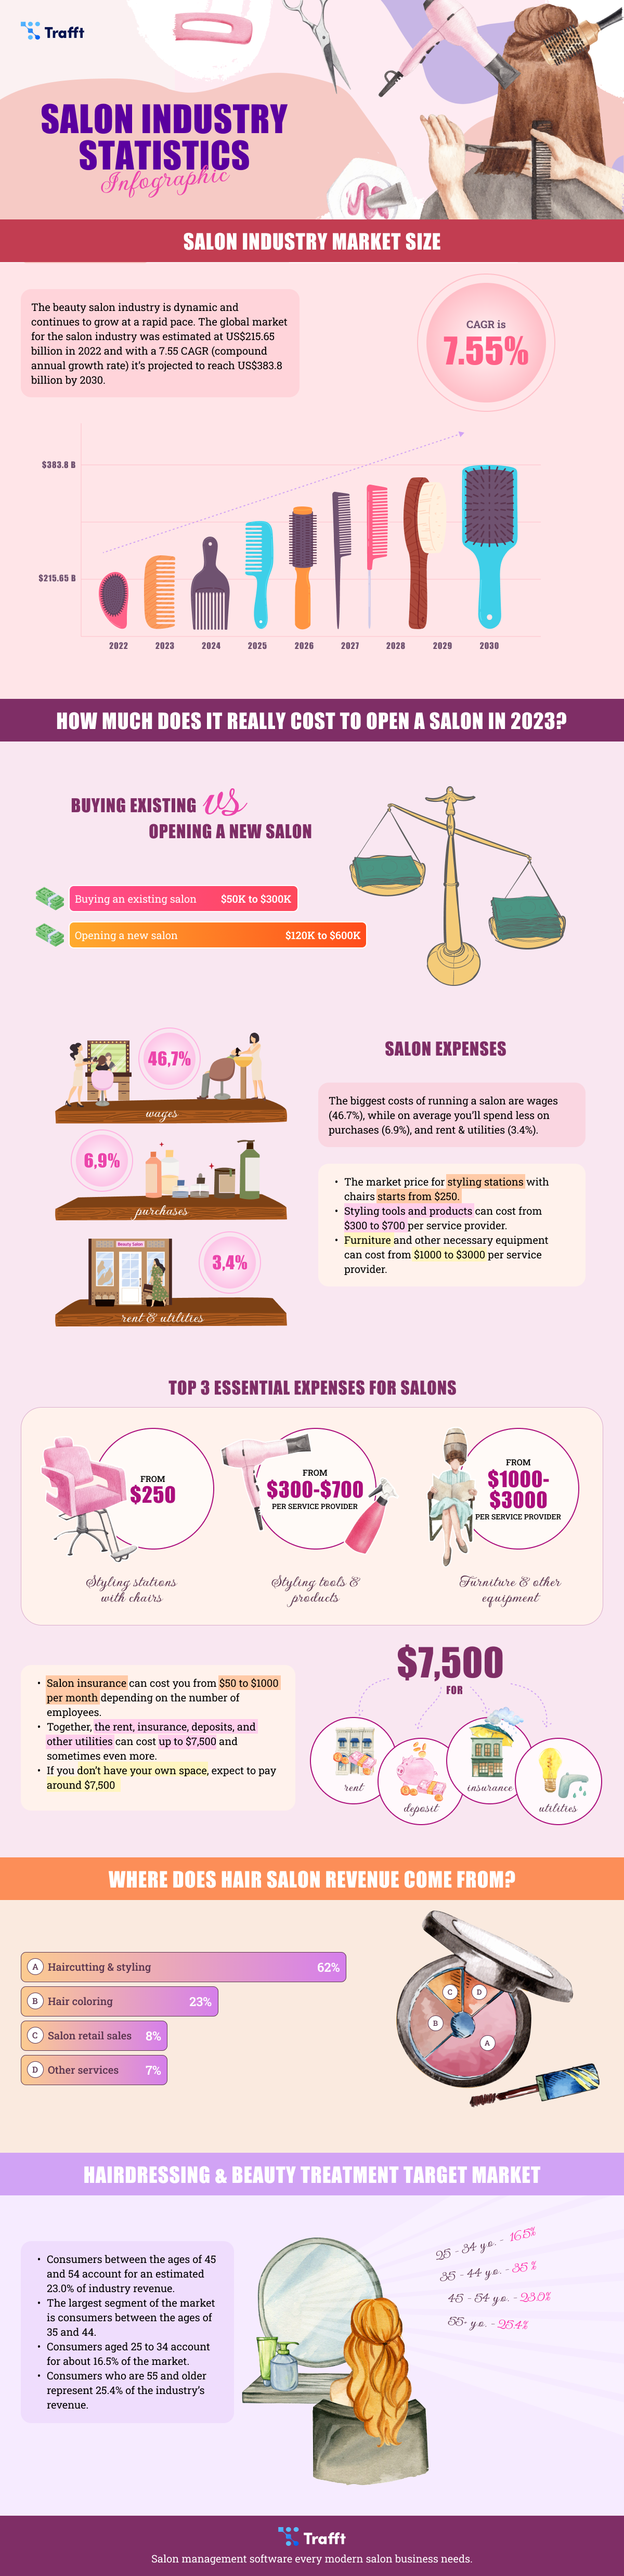 Salon Scale Disrupting the Salon Industry